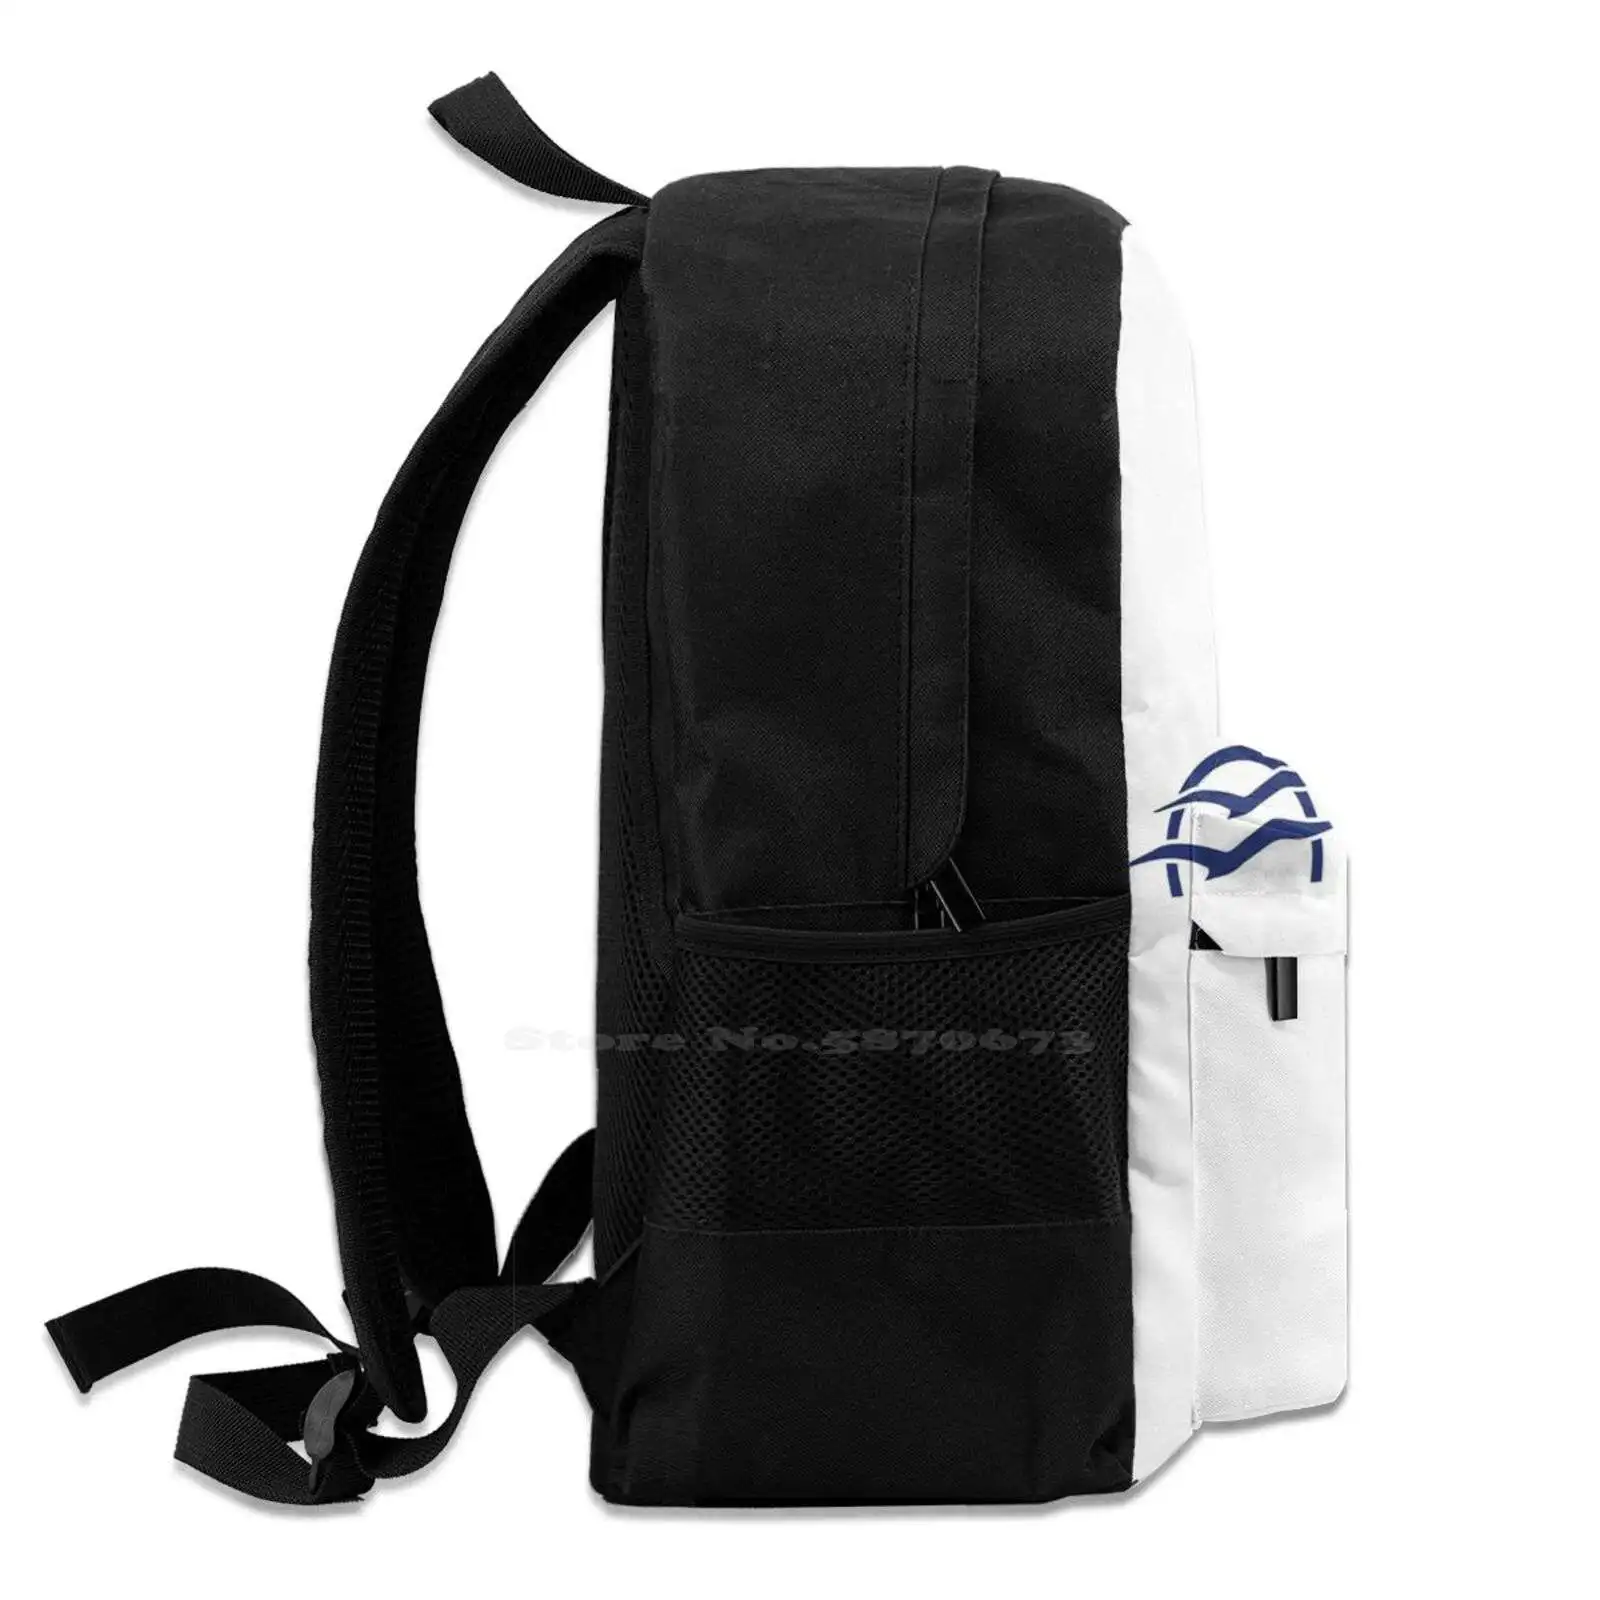 Aegean Logo School Bags For Teenage Girls Laptop Travel Bags Easyjet Easy Jet British Airways Lufthansa Air France Air Canada